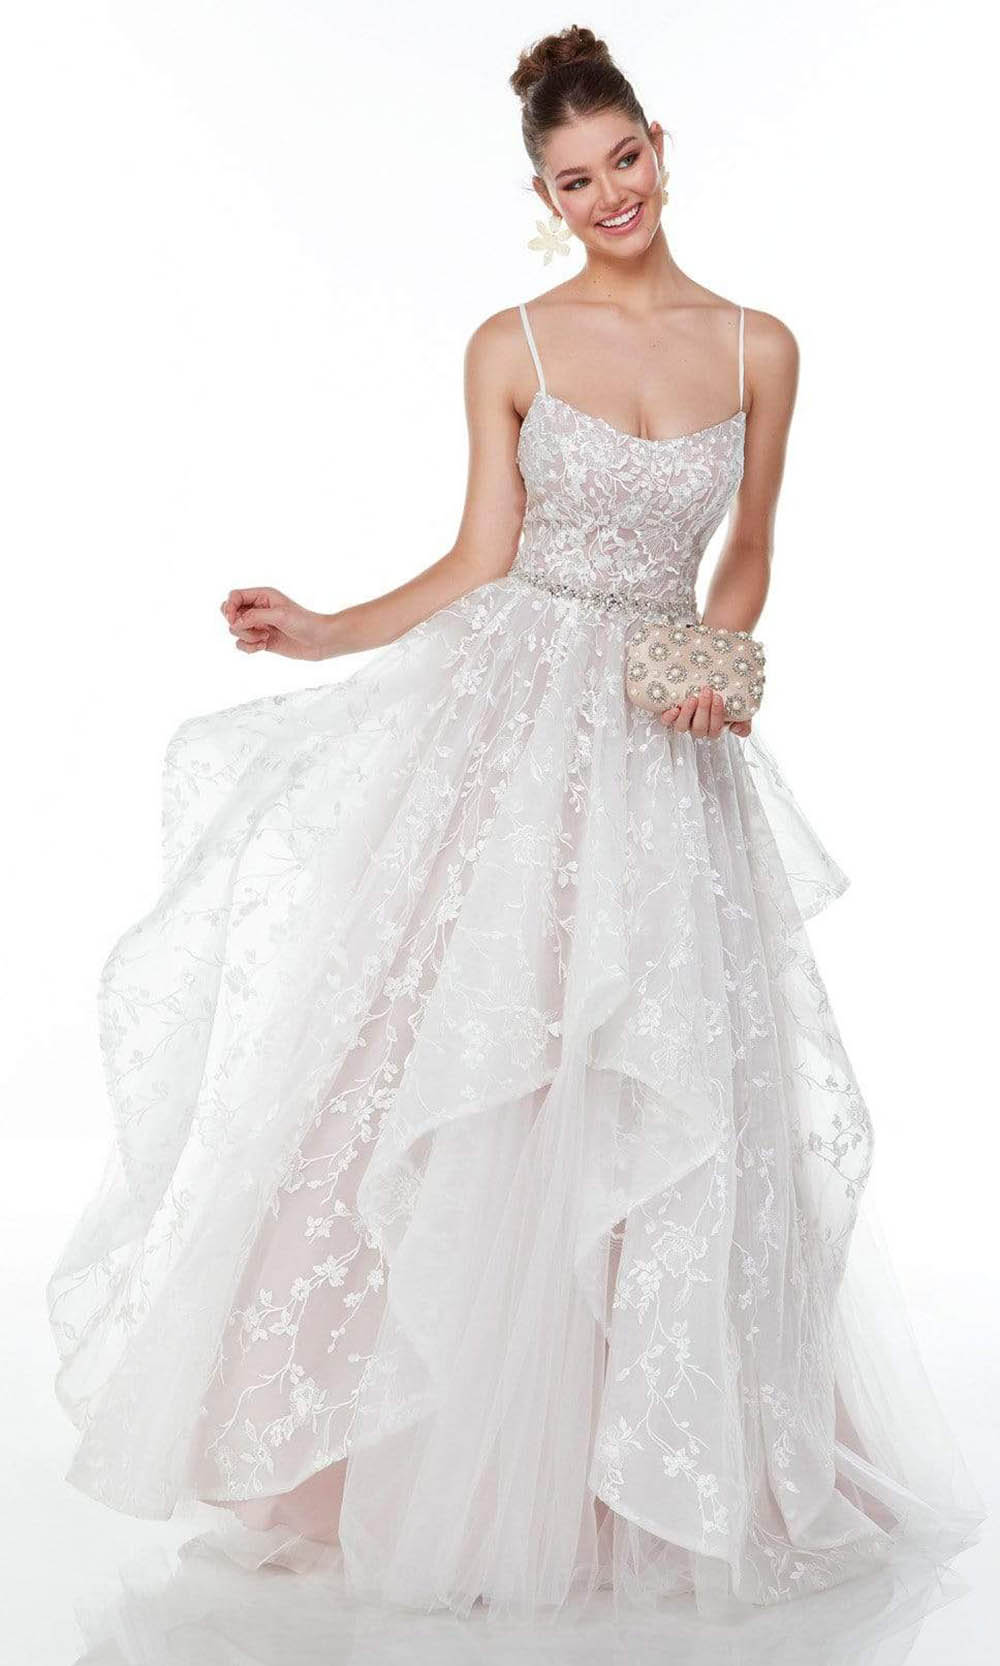 Alyce Paris - 61111 Scoop Neck Layered Ballgown Formal Gowns 000 / Diamond White/Cashmere Rose